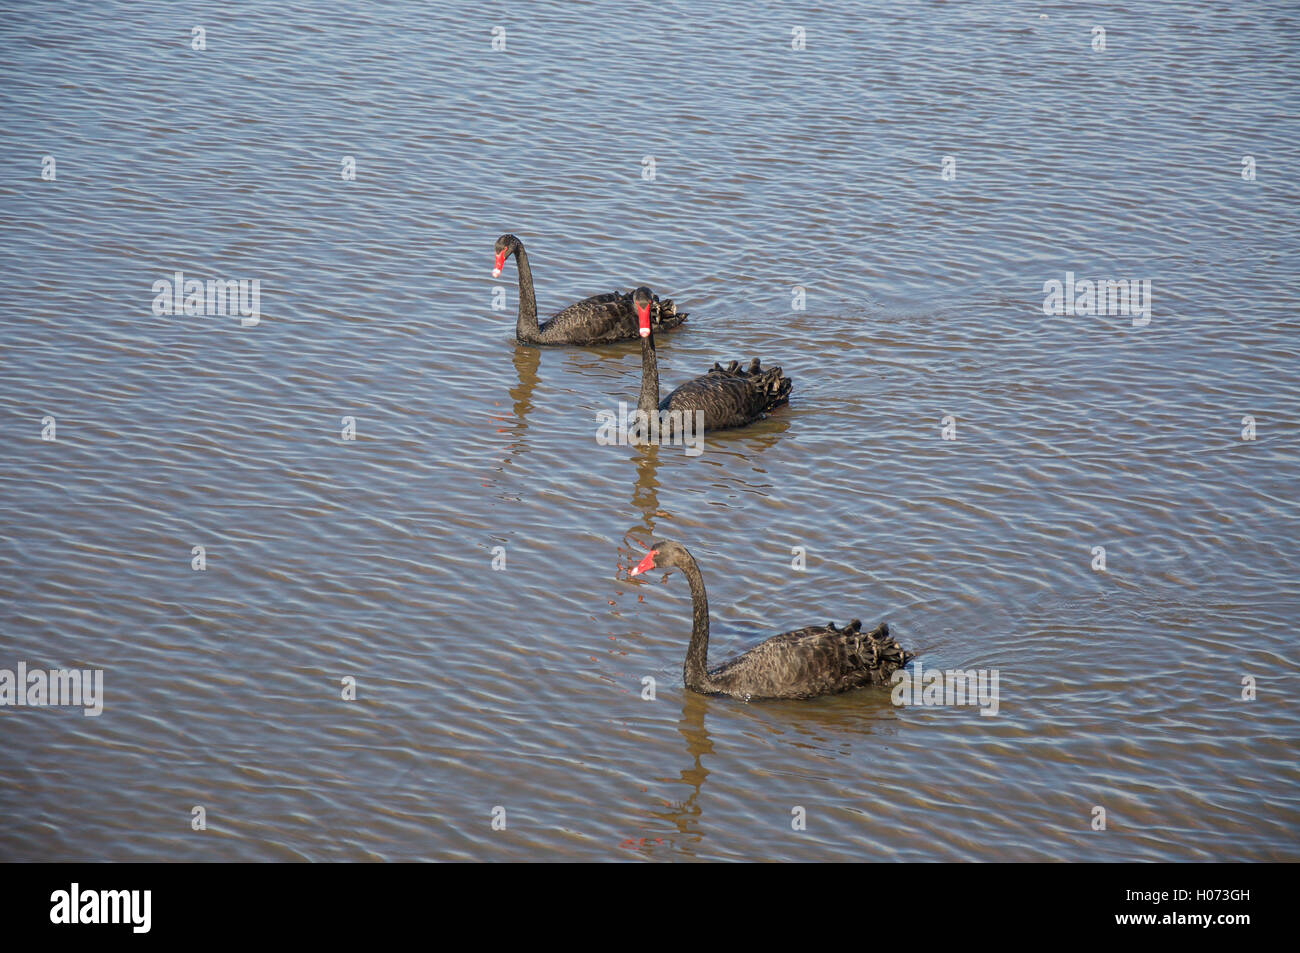 Three black swans with vibrant red beaks swimming in Bibra Lake wetland reserve in Western Australia. Stock Photo